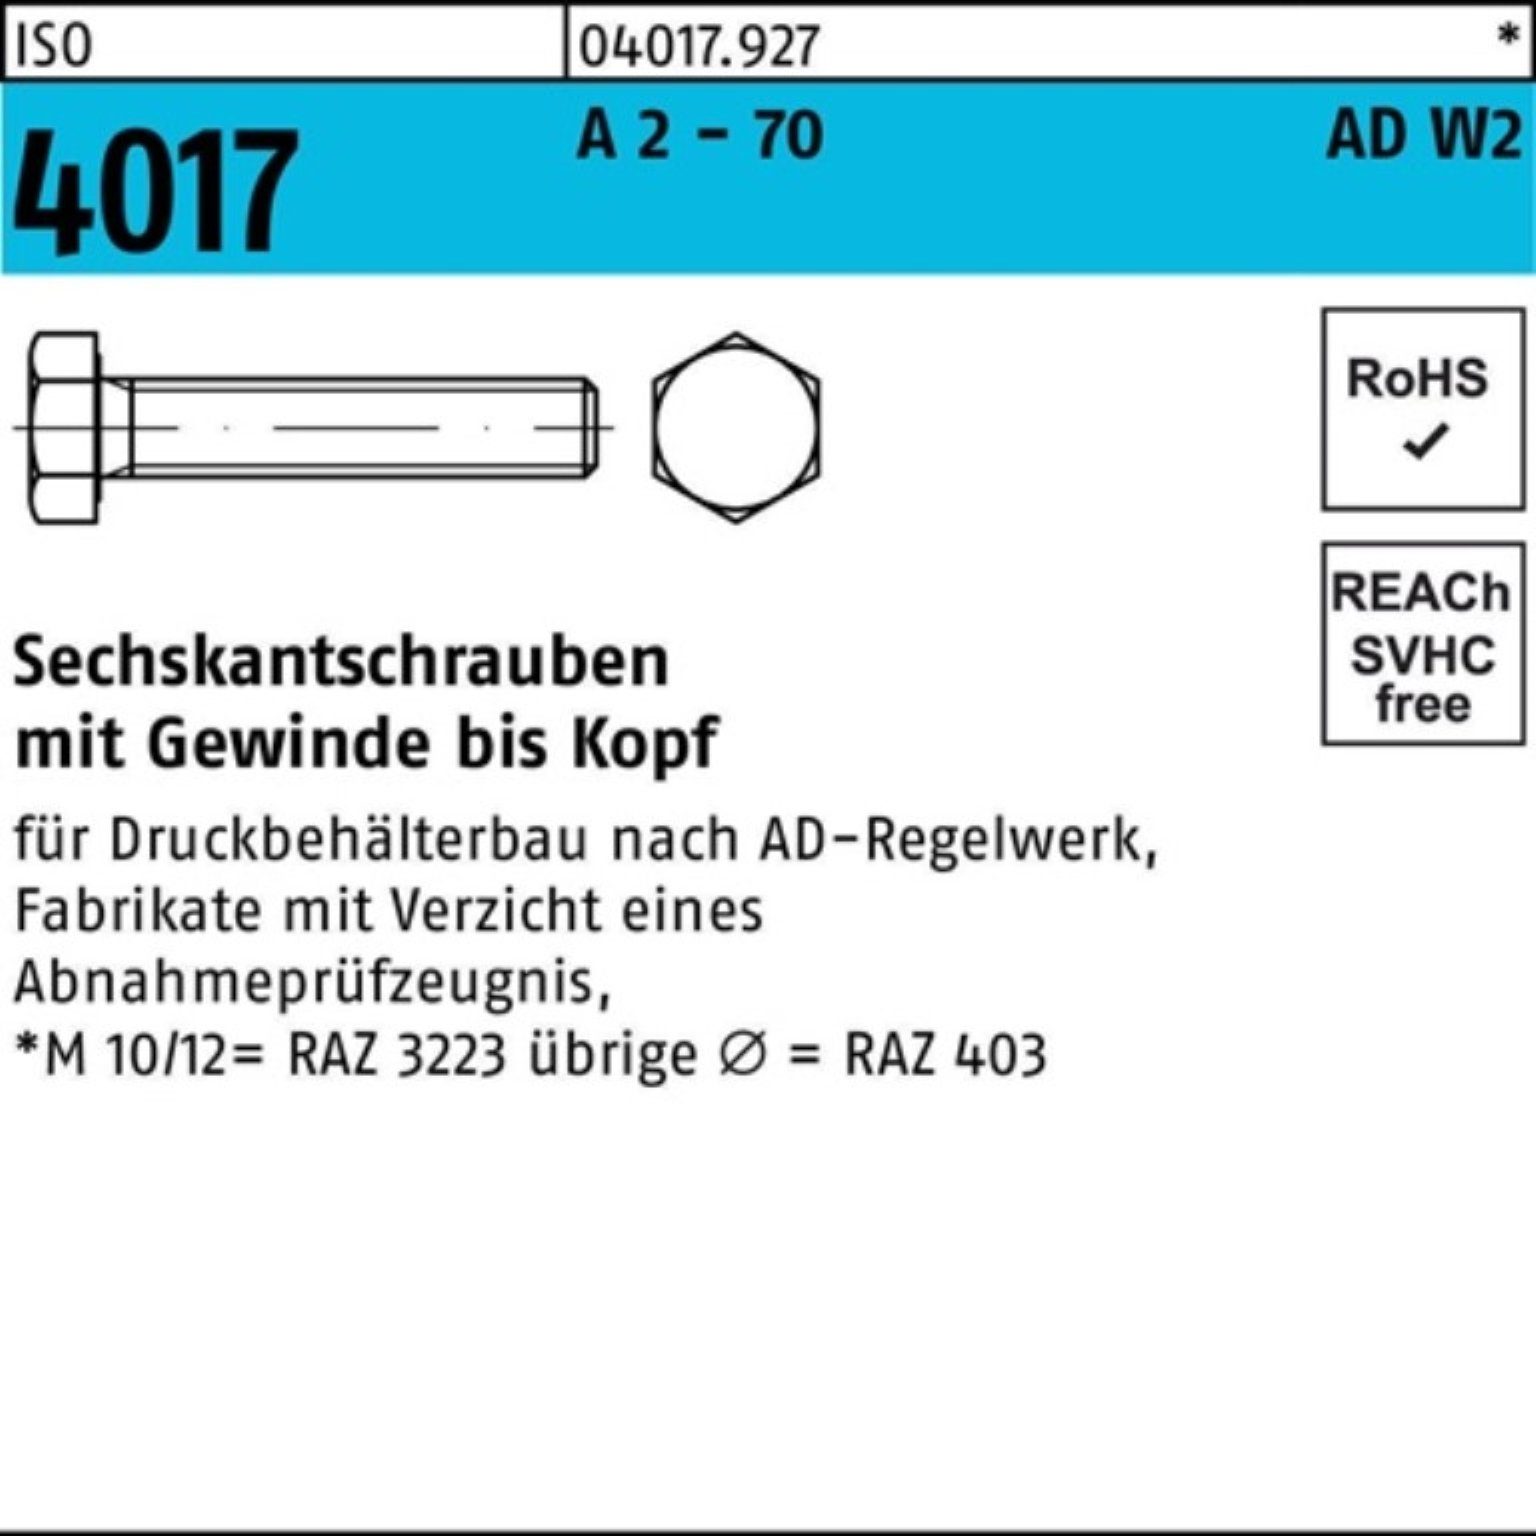 VG St ISO Sechskantschraube M16x AD-W2 Bufab 70 - A Pack 100er 35 4017 Sechskantschraube 25 2